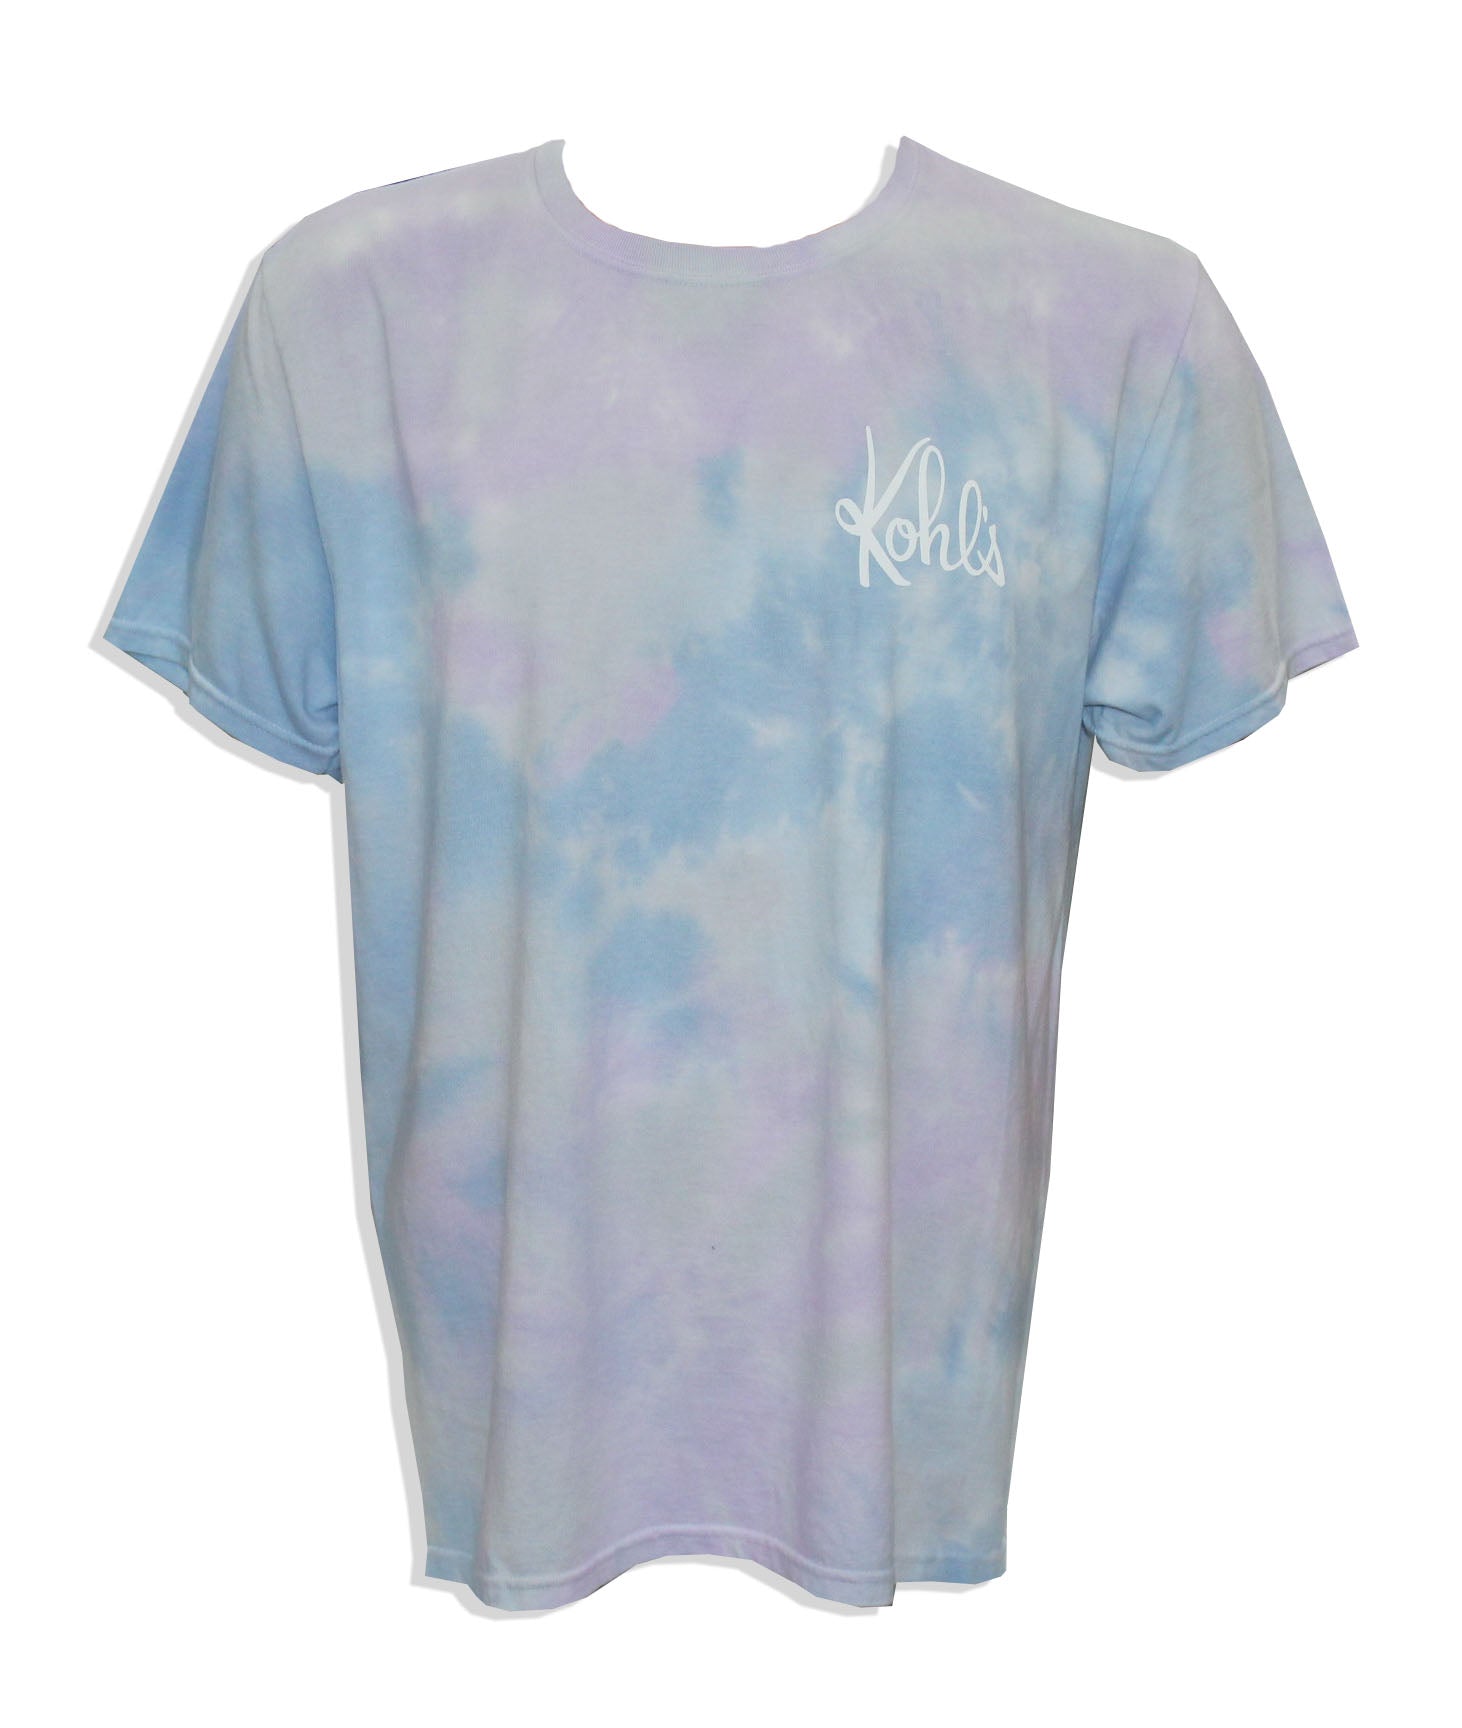 Kohl's Unisex Tie-Dye T-Shirt